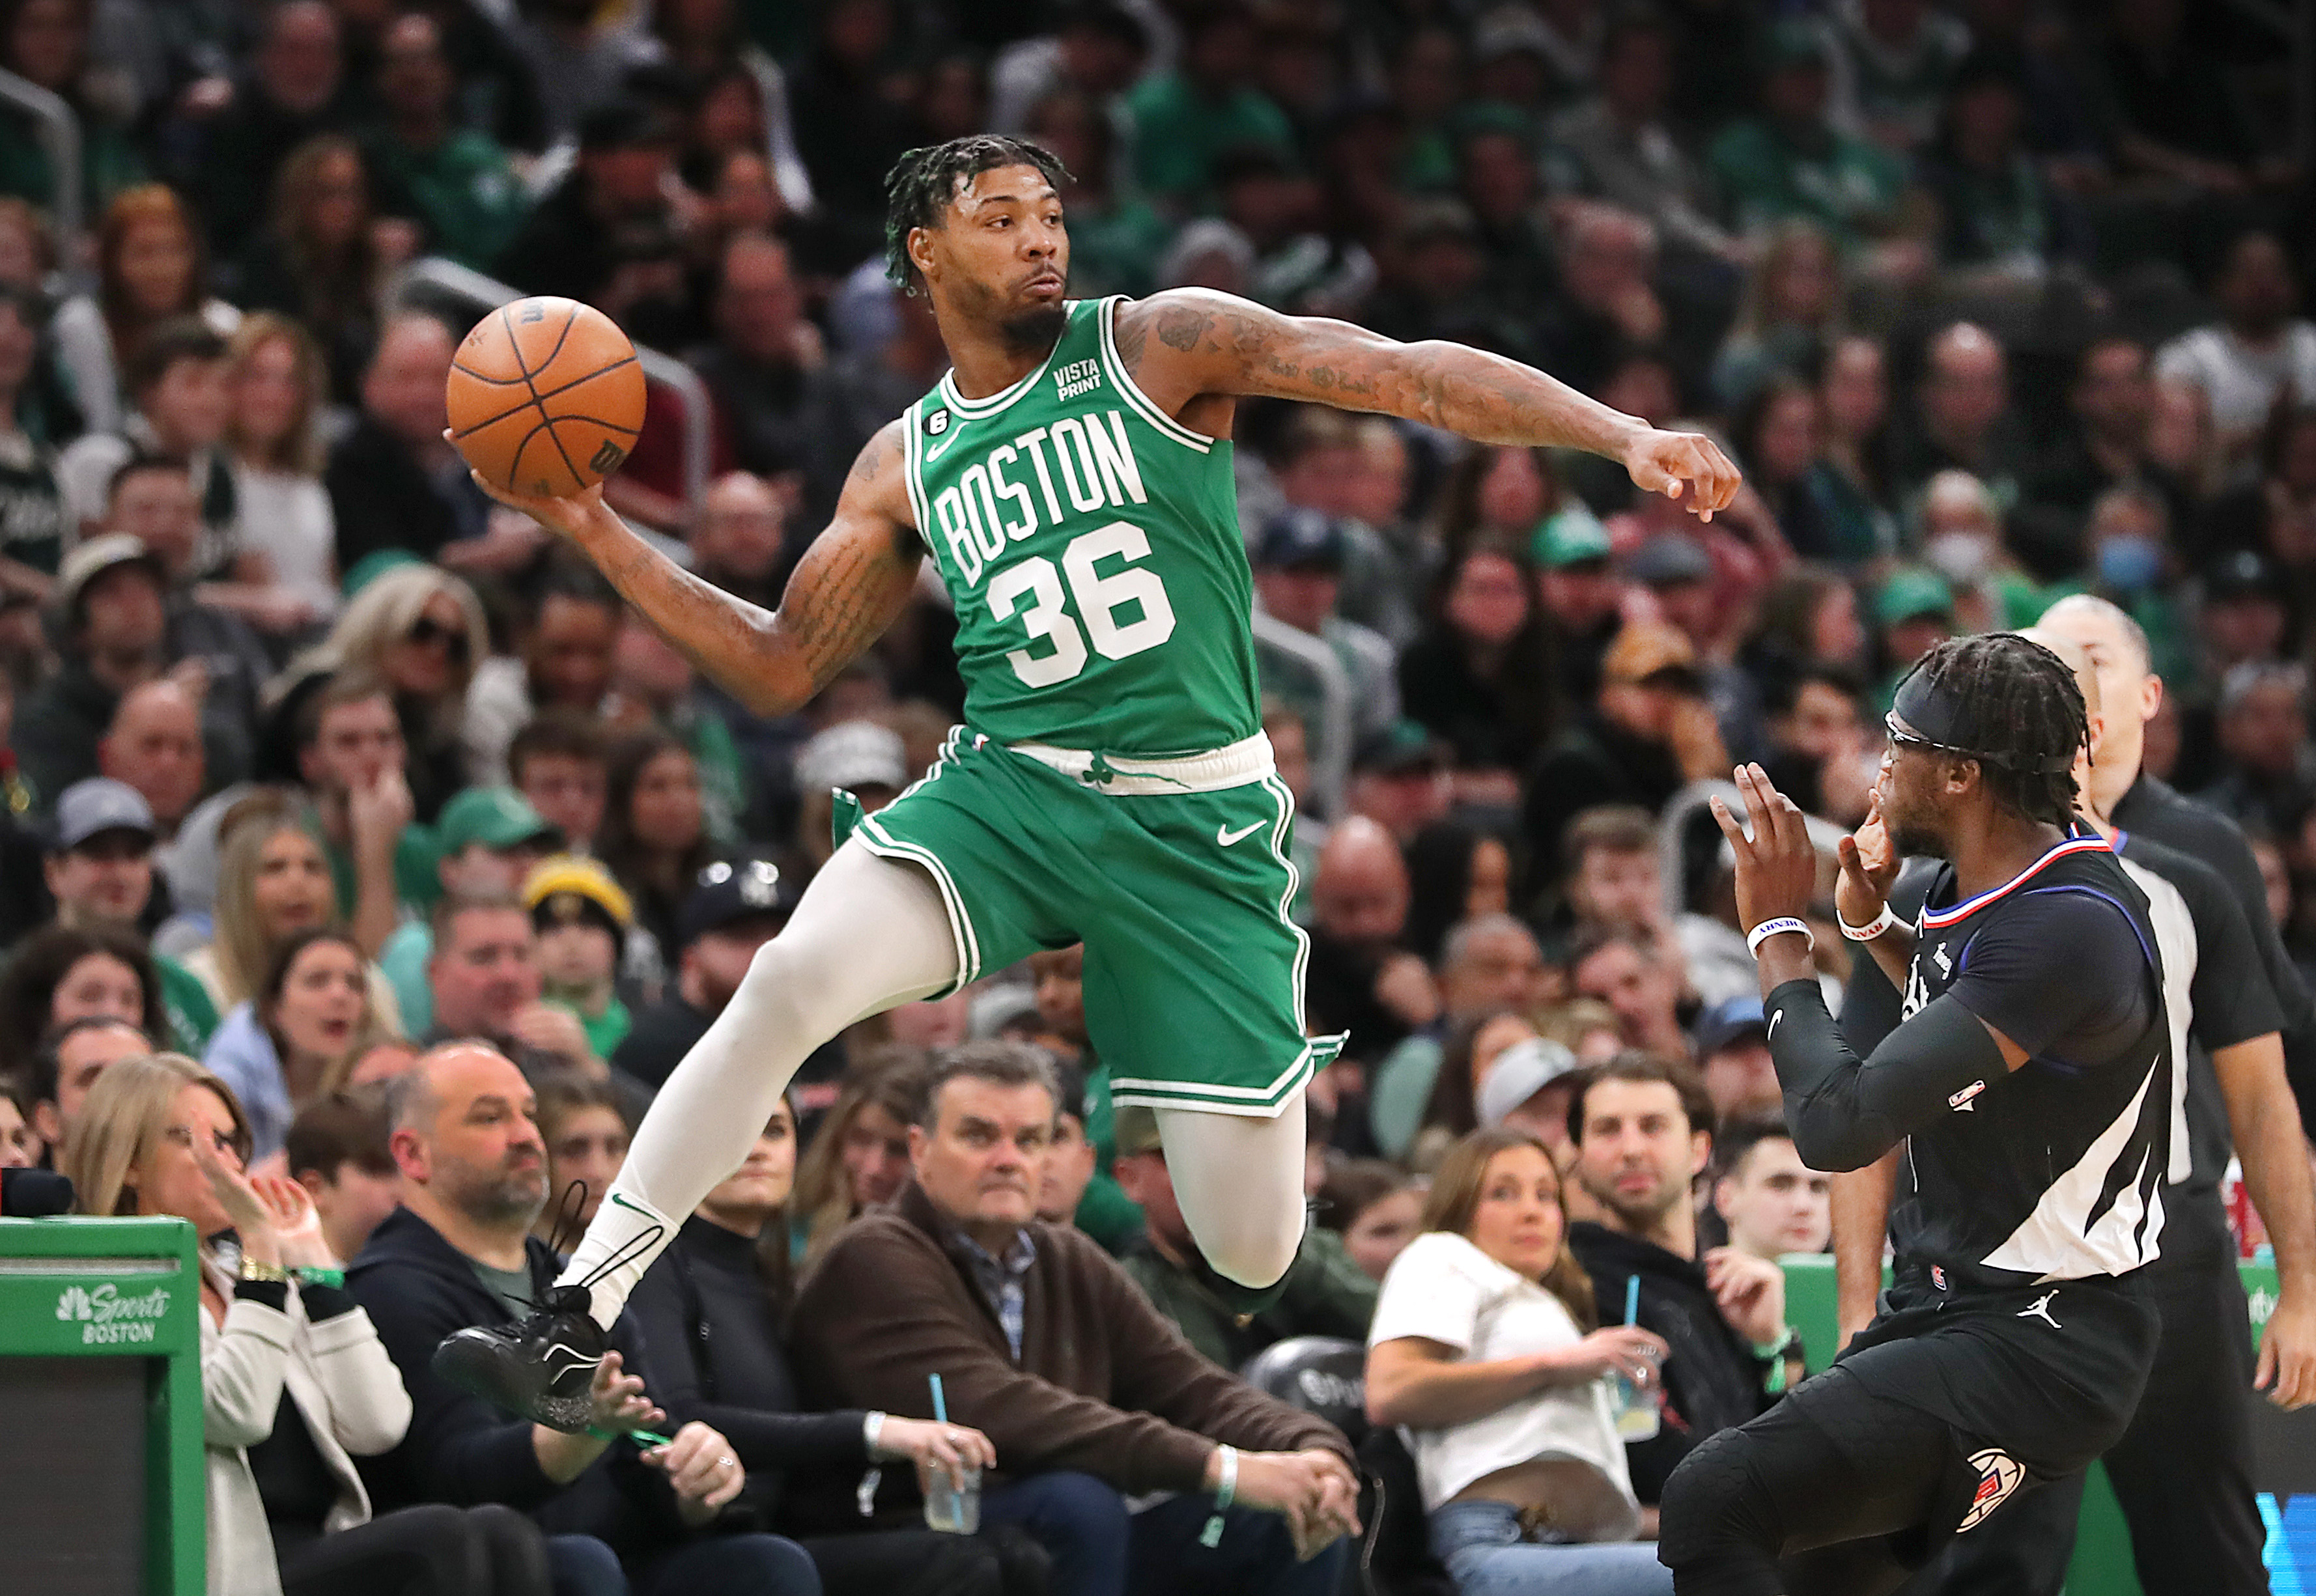 Marcus Smart transforms the Celtics' offense